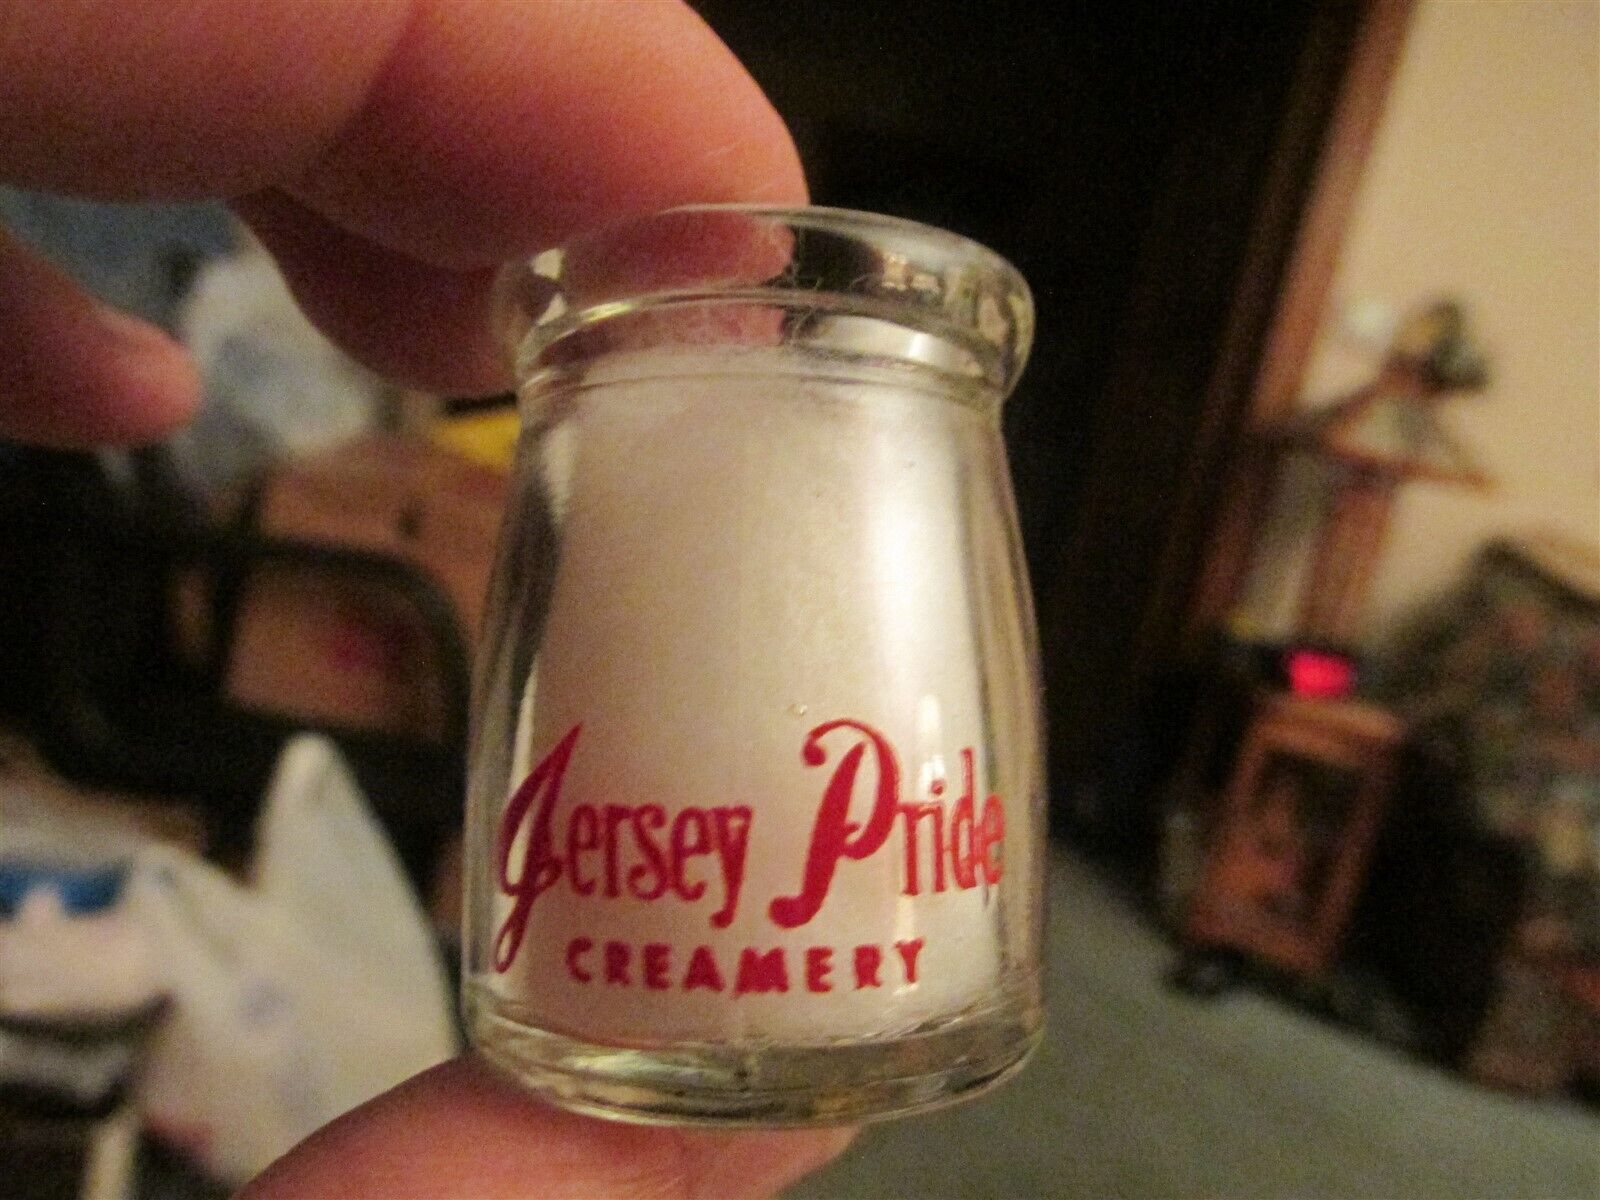 Jersey Pride Creamery / blank, red, Round 1/2 Oz. Dairy Creamer Columbia, TENN